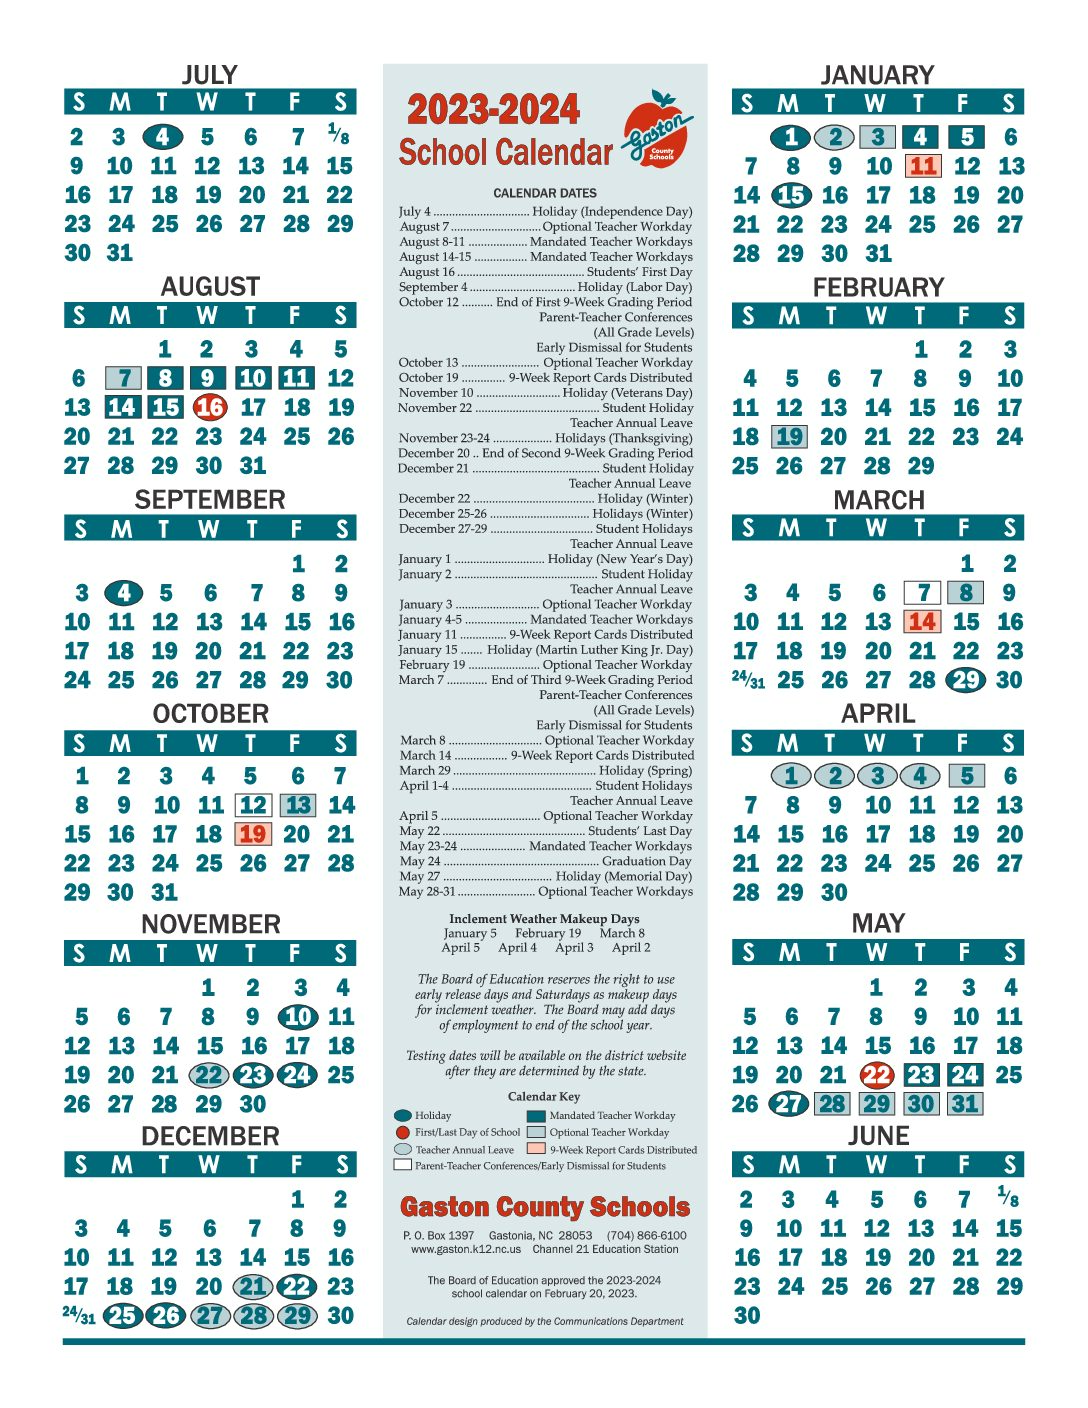 gaston-county-schools-calendar-2023-2024-in-pdf